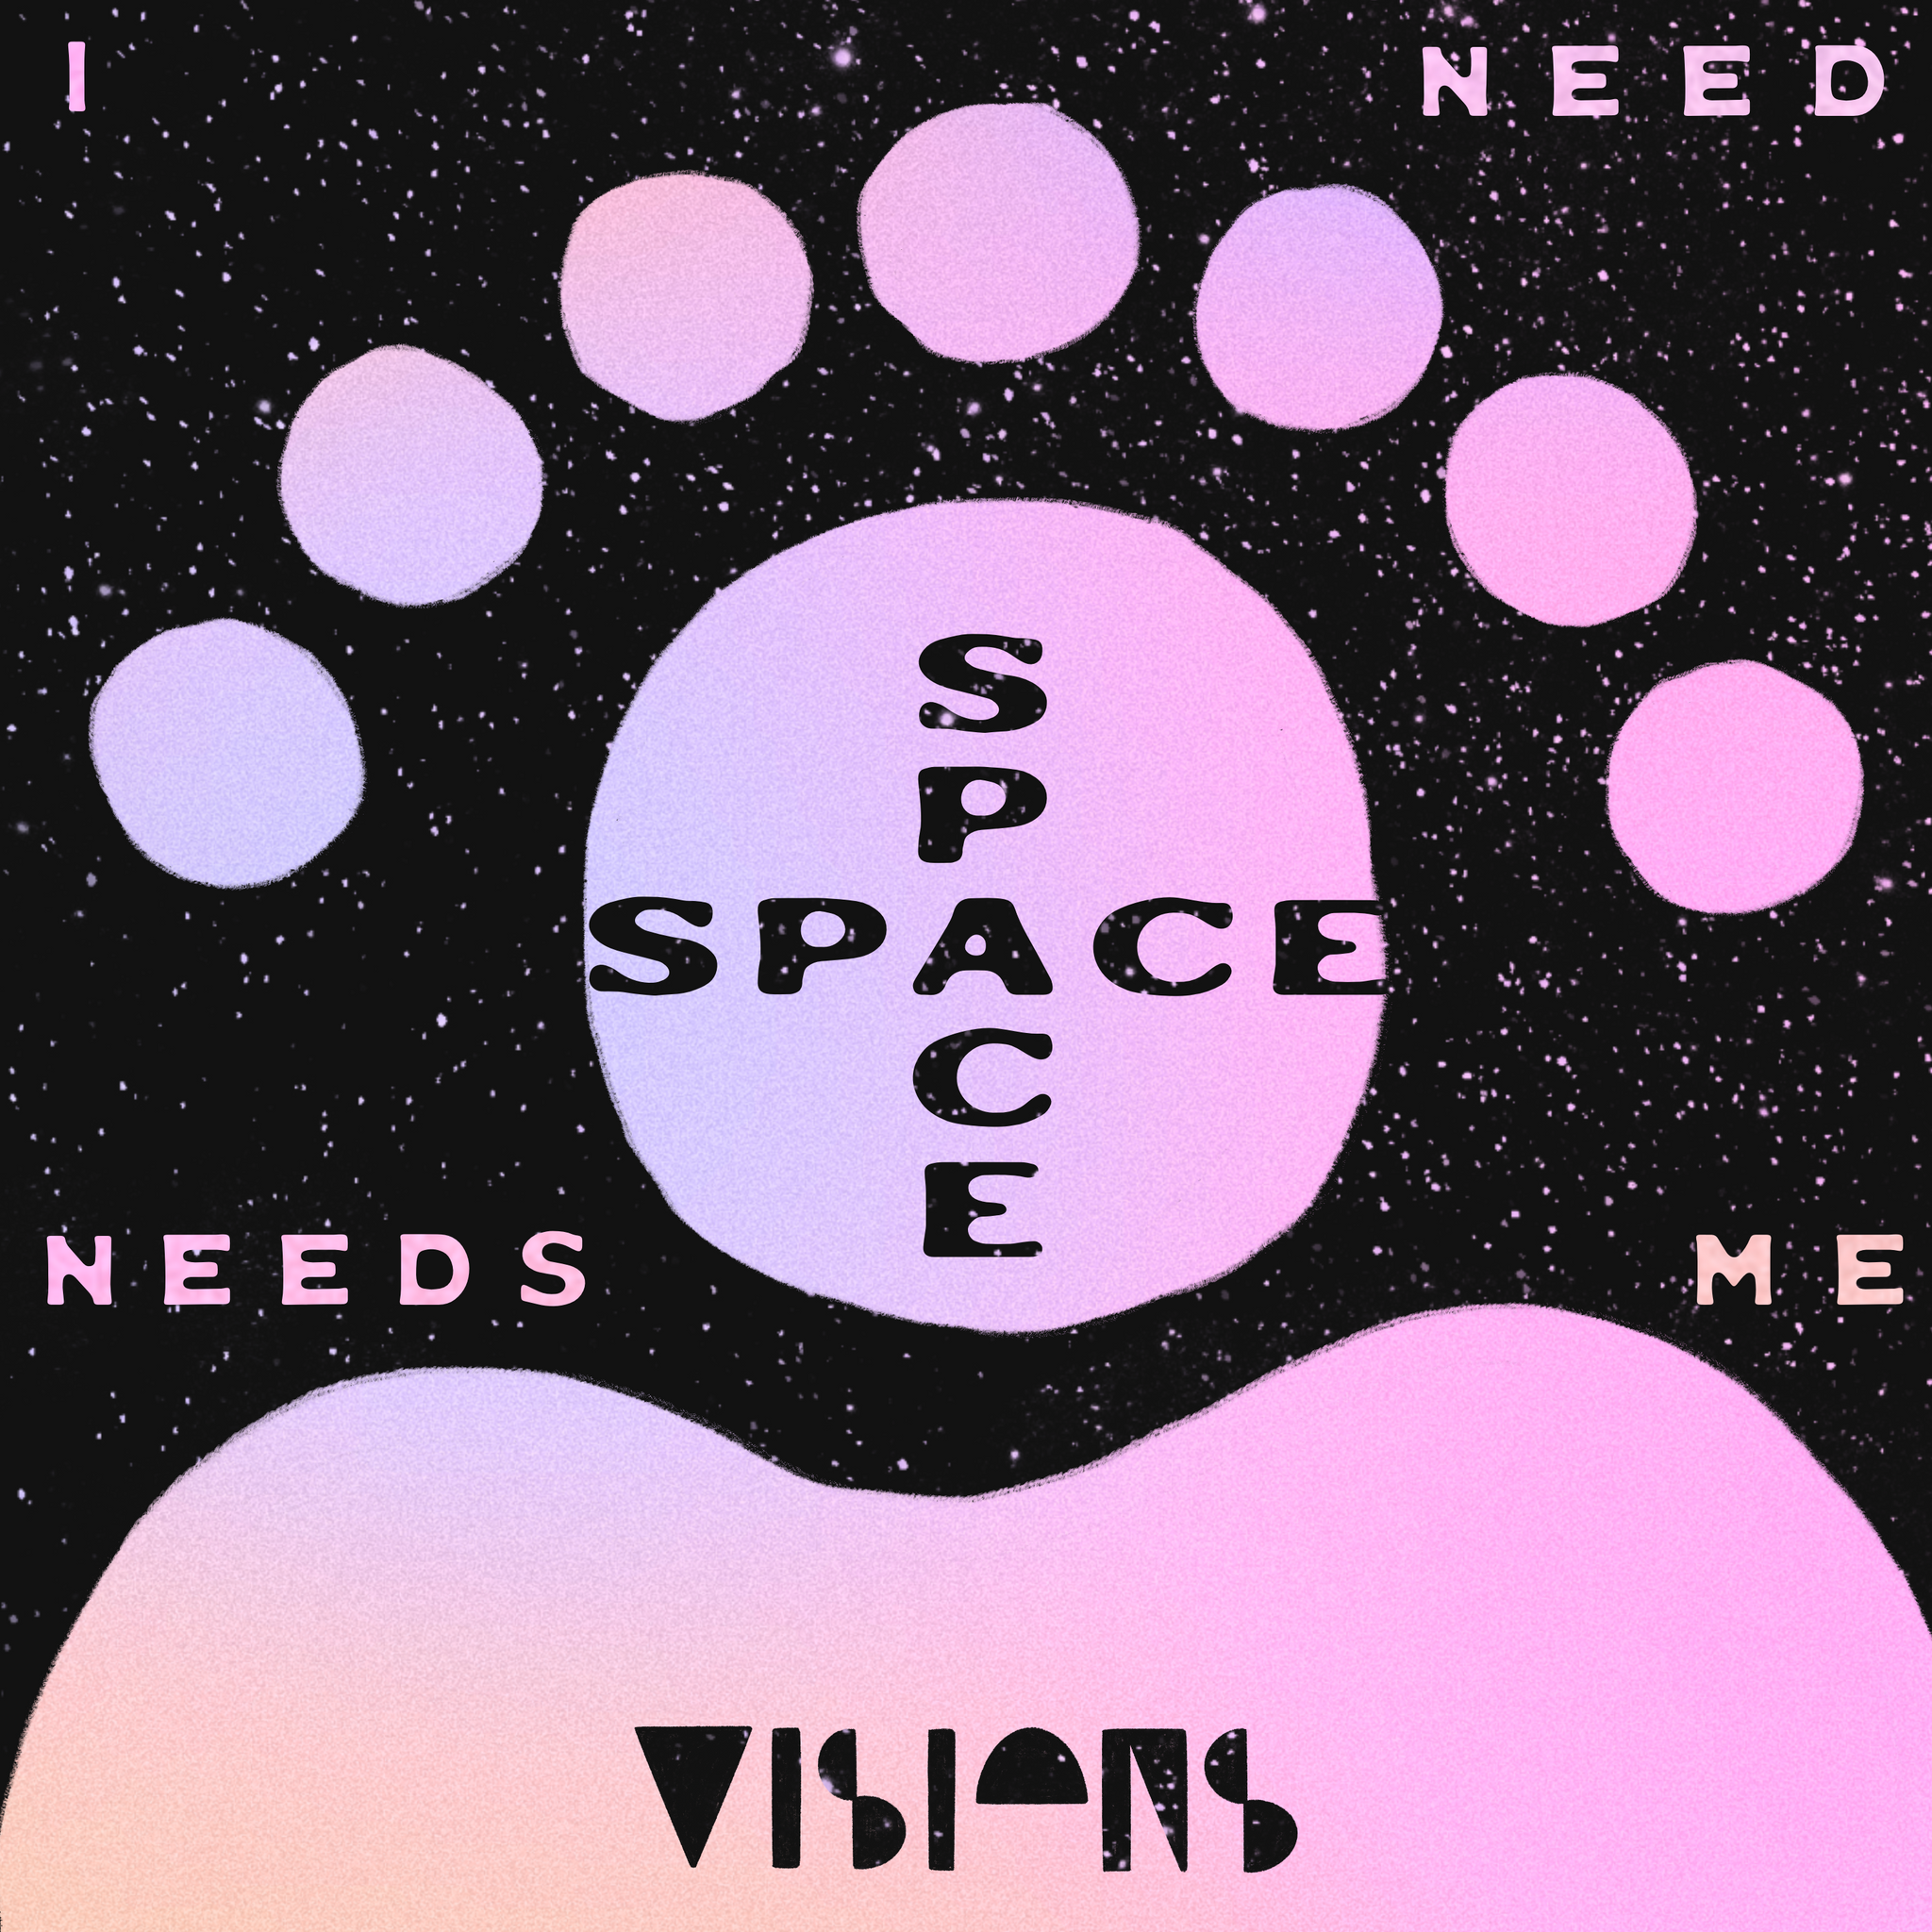 I NEED SPACE NEEDS ME